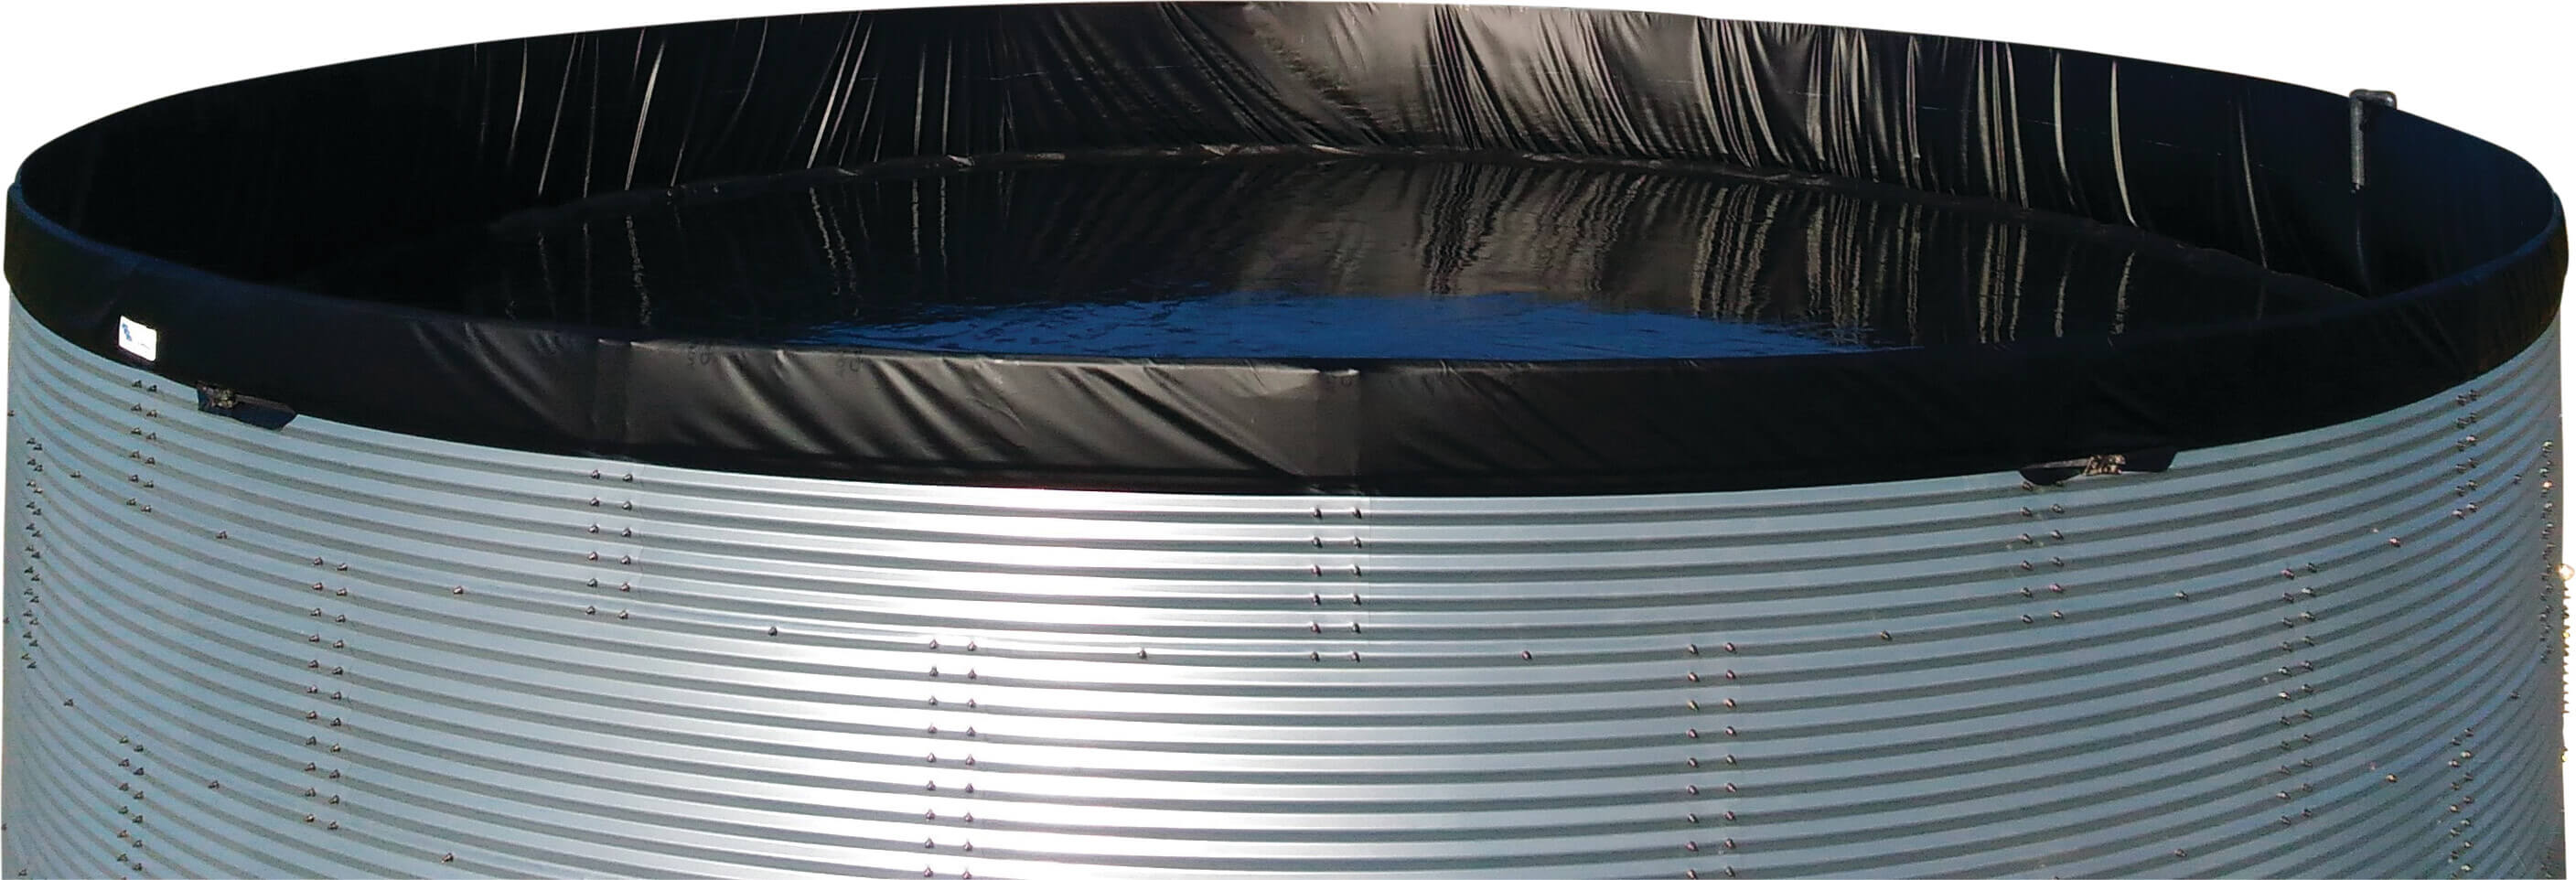 Water tank steel galvanised 5000ltr type WSW 2.01 x 1.59m